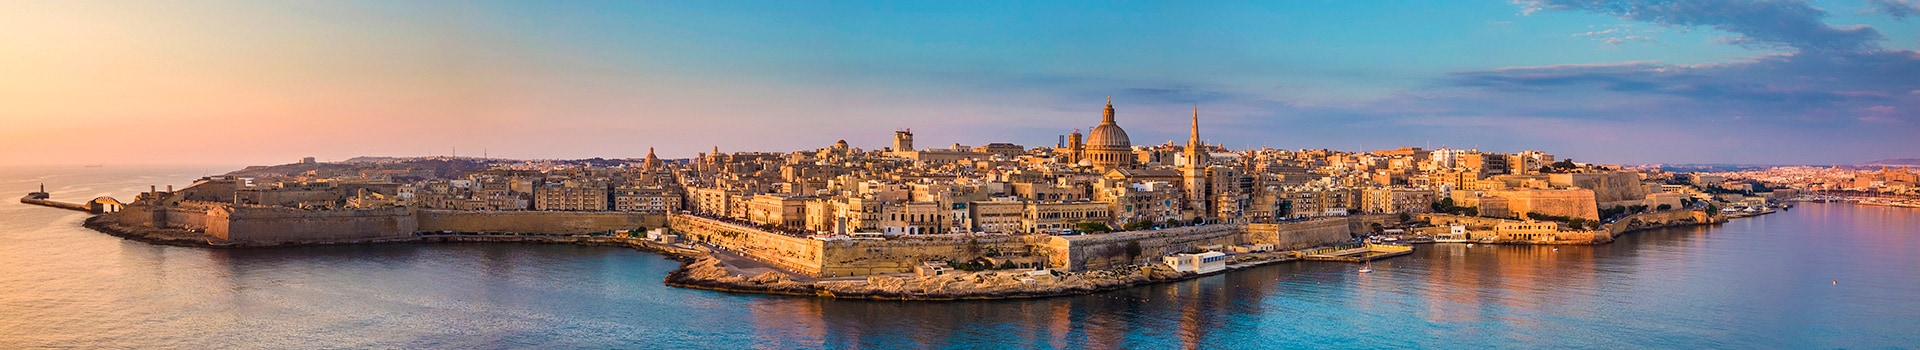 Niza - Malta